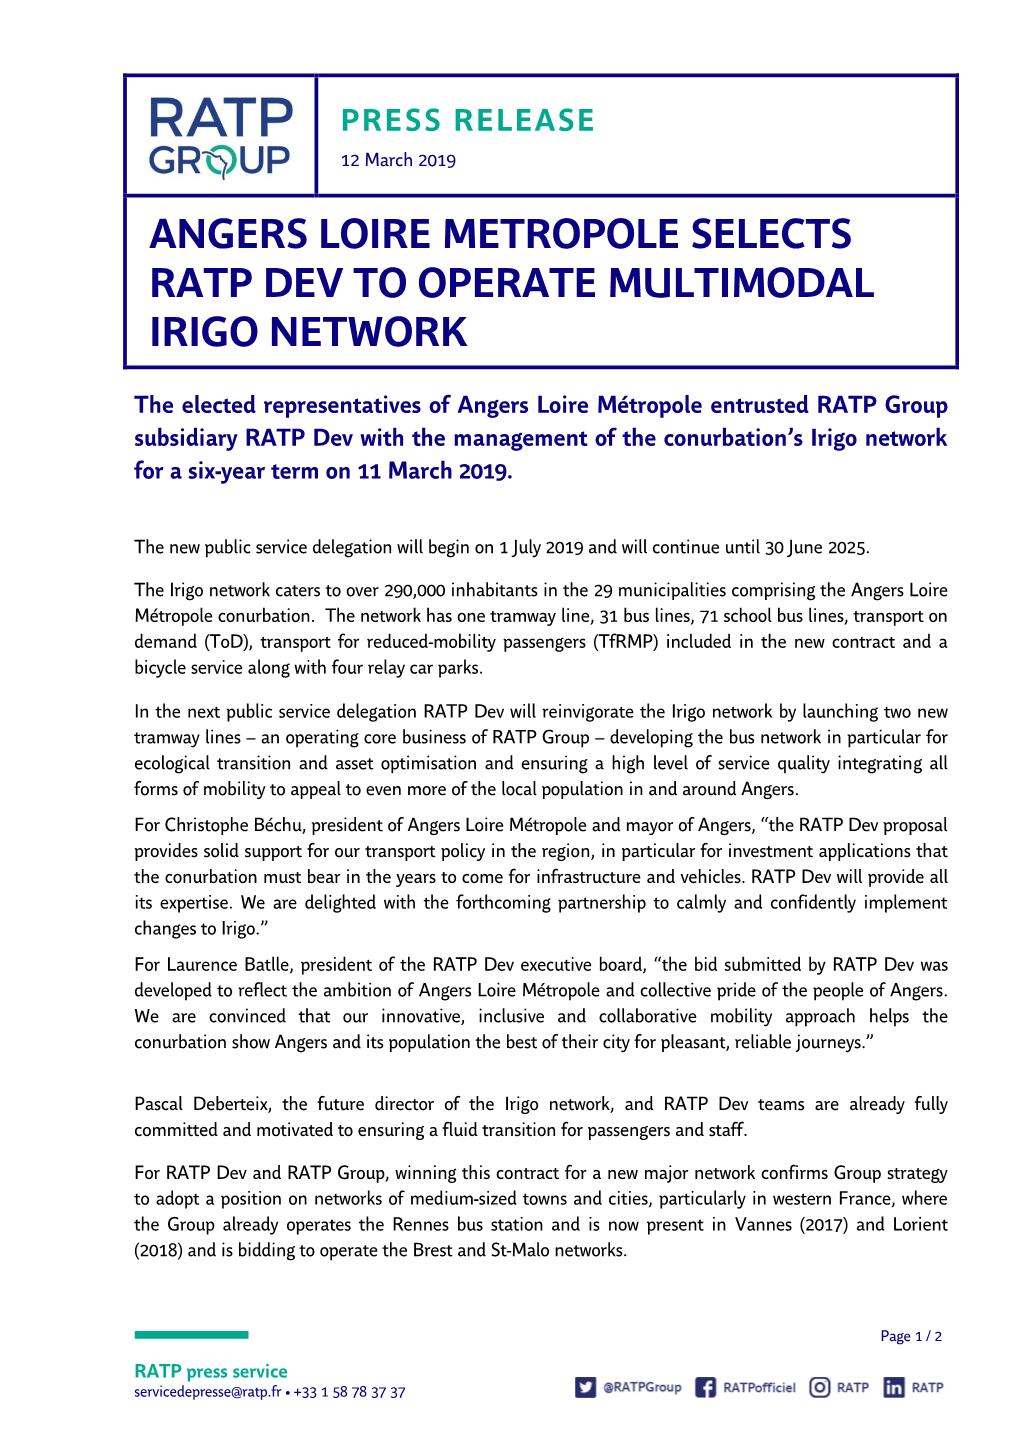 Angers Loire Metropole Selects Ratp Dev to Operate Multimodal Irigo Network